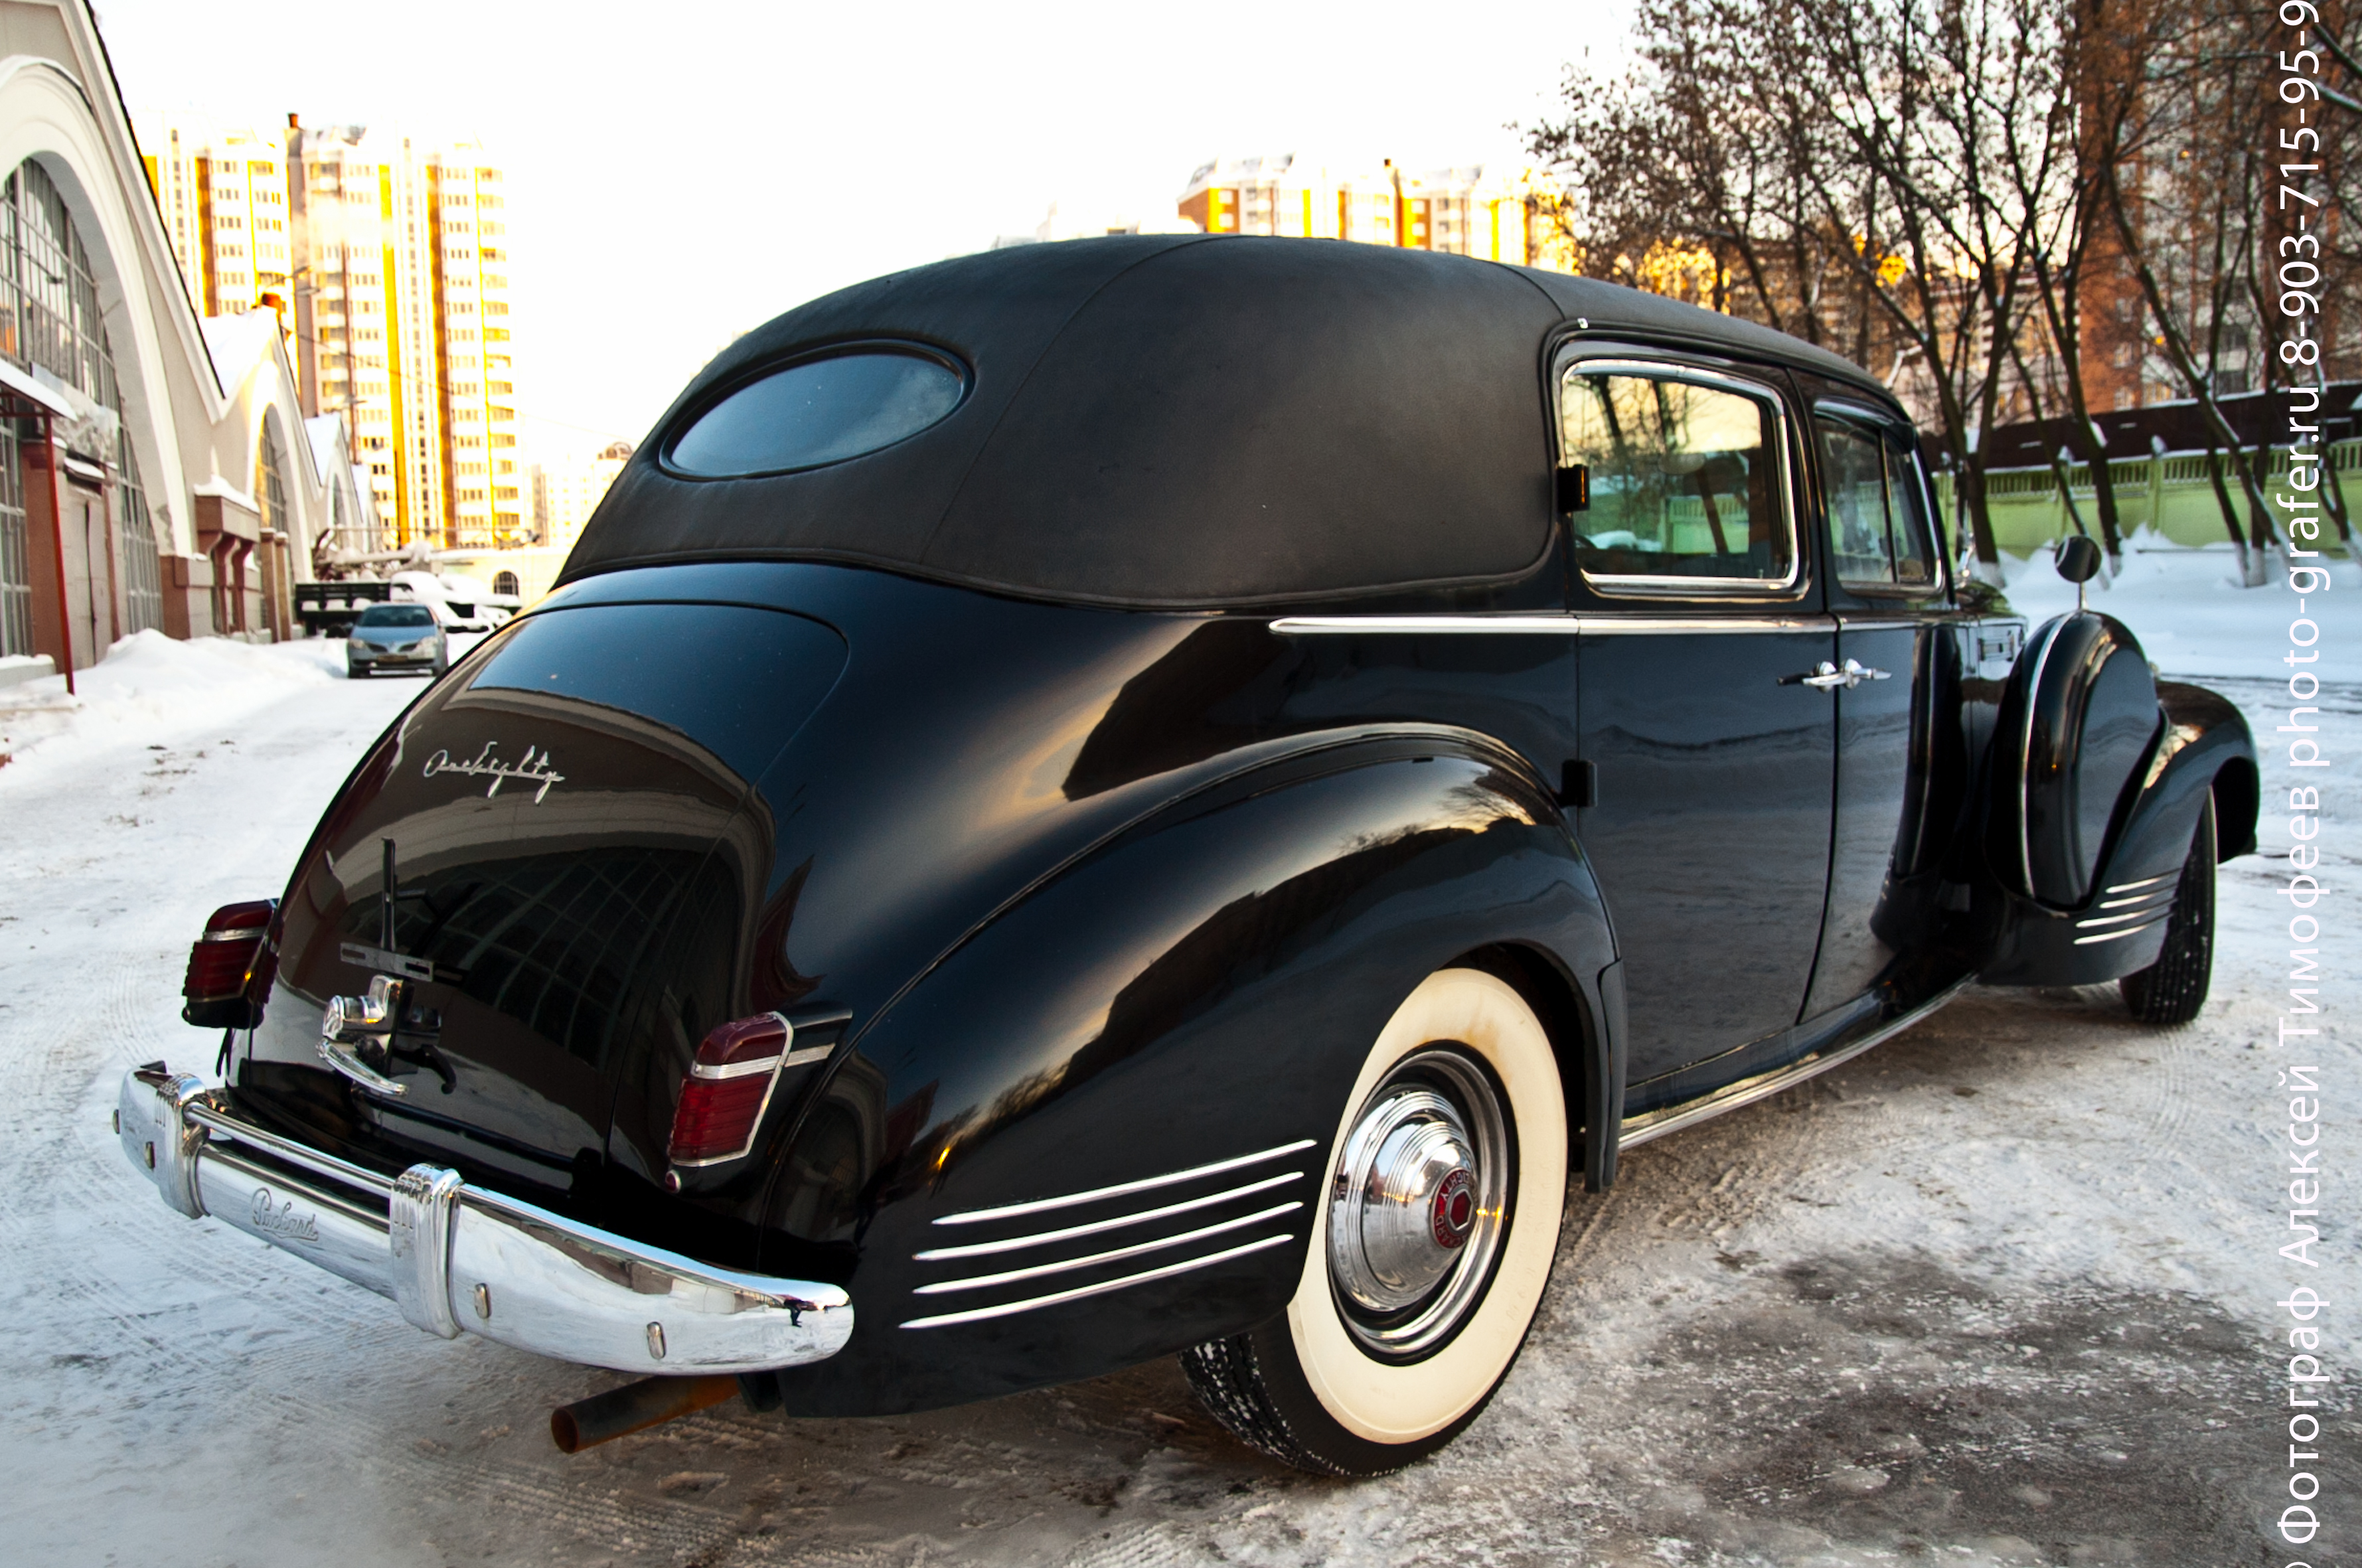 1941 Packard 180, Packard для съёмок, Packard в аренду, старинное авто в аренду, довоенный автомобиль в аренду, g-car